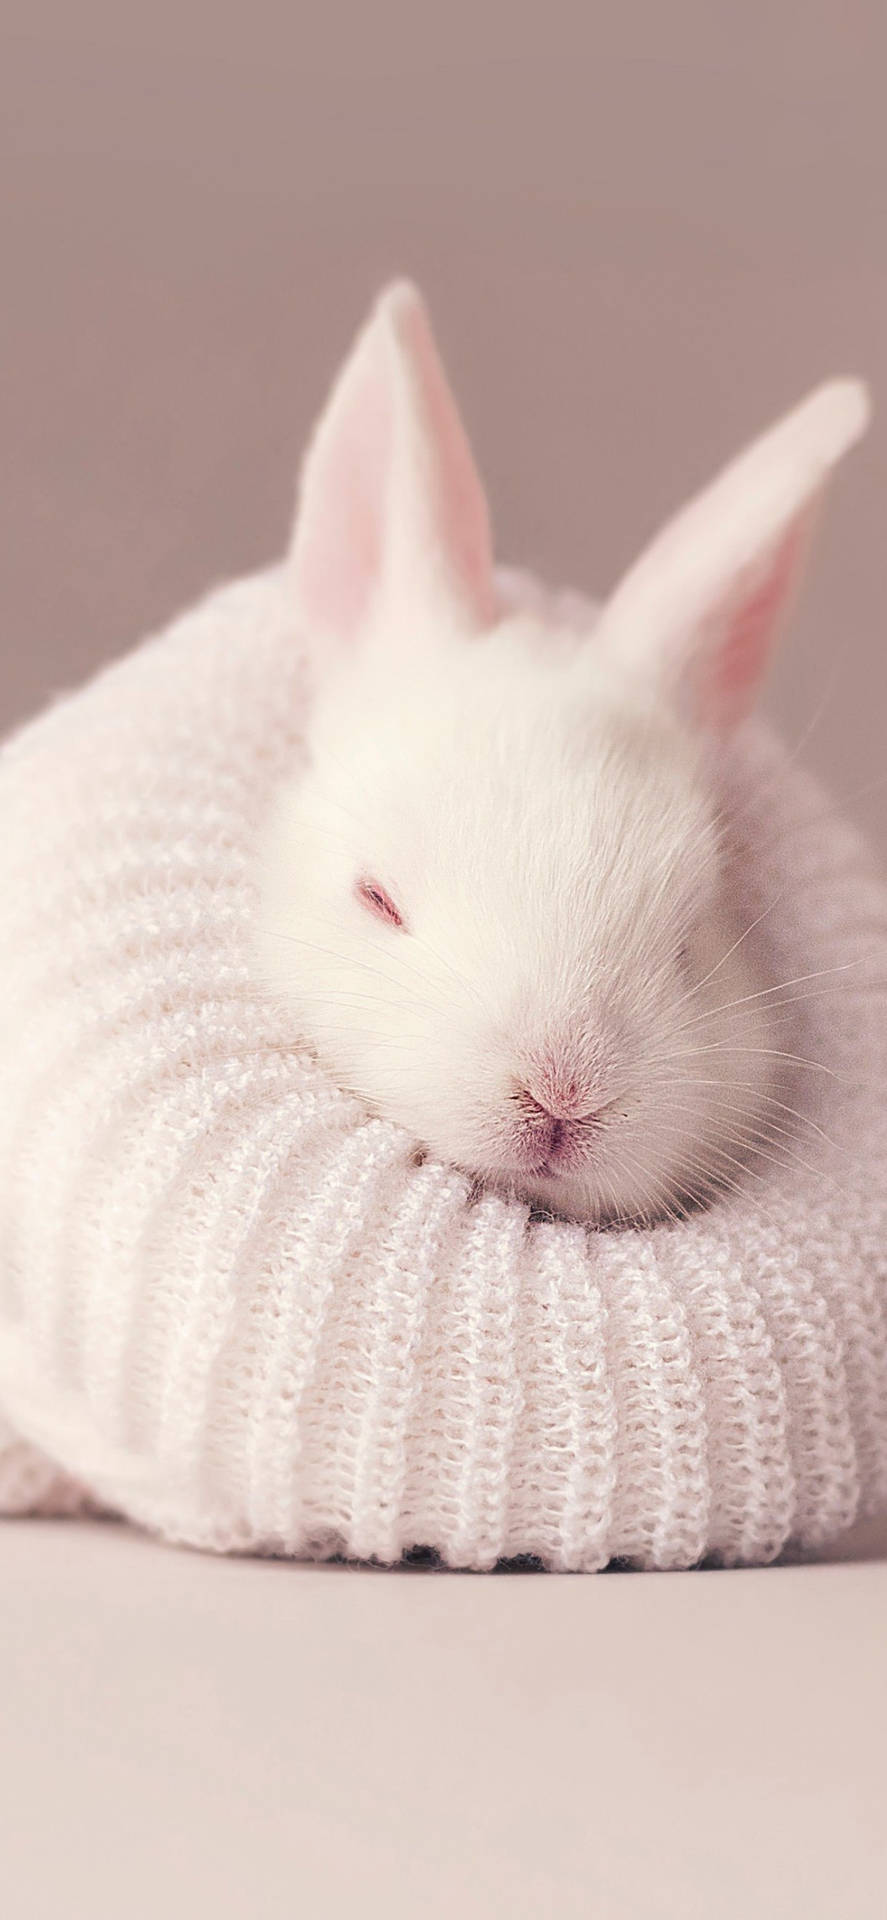 Cute Sleeping Baby Bunny Wallpaper